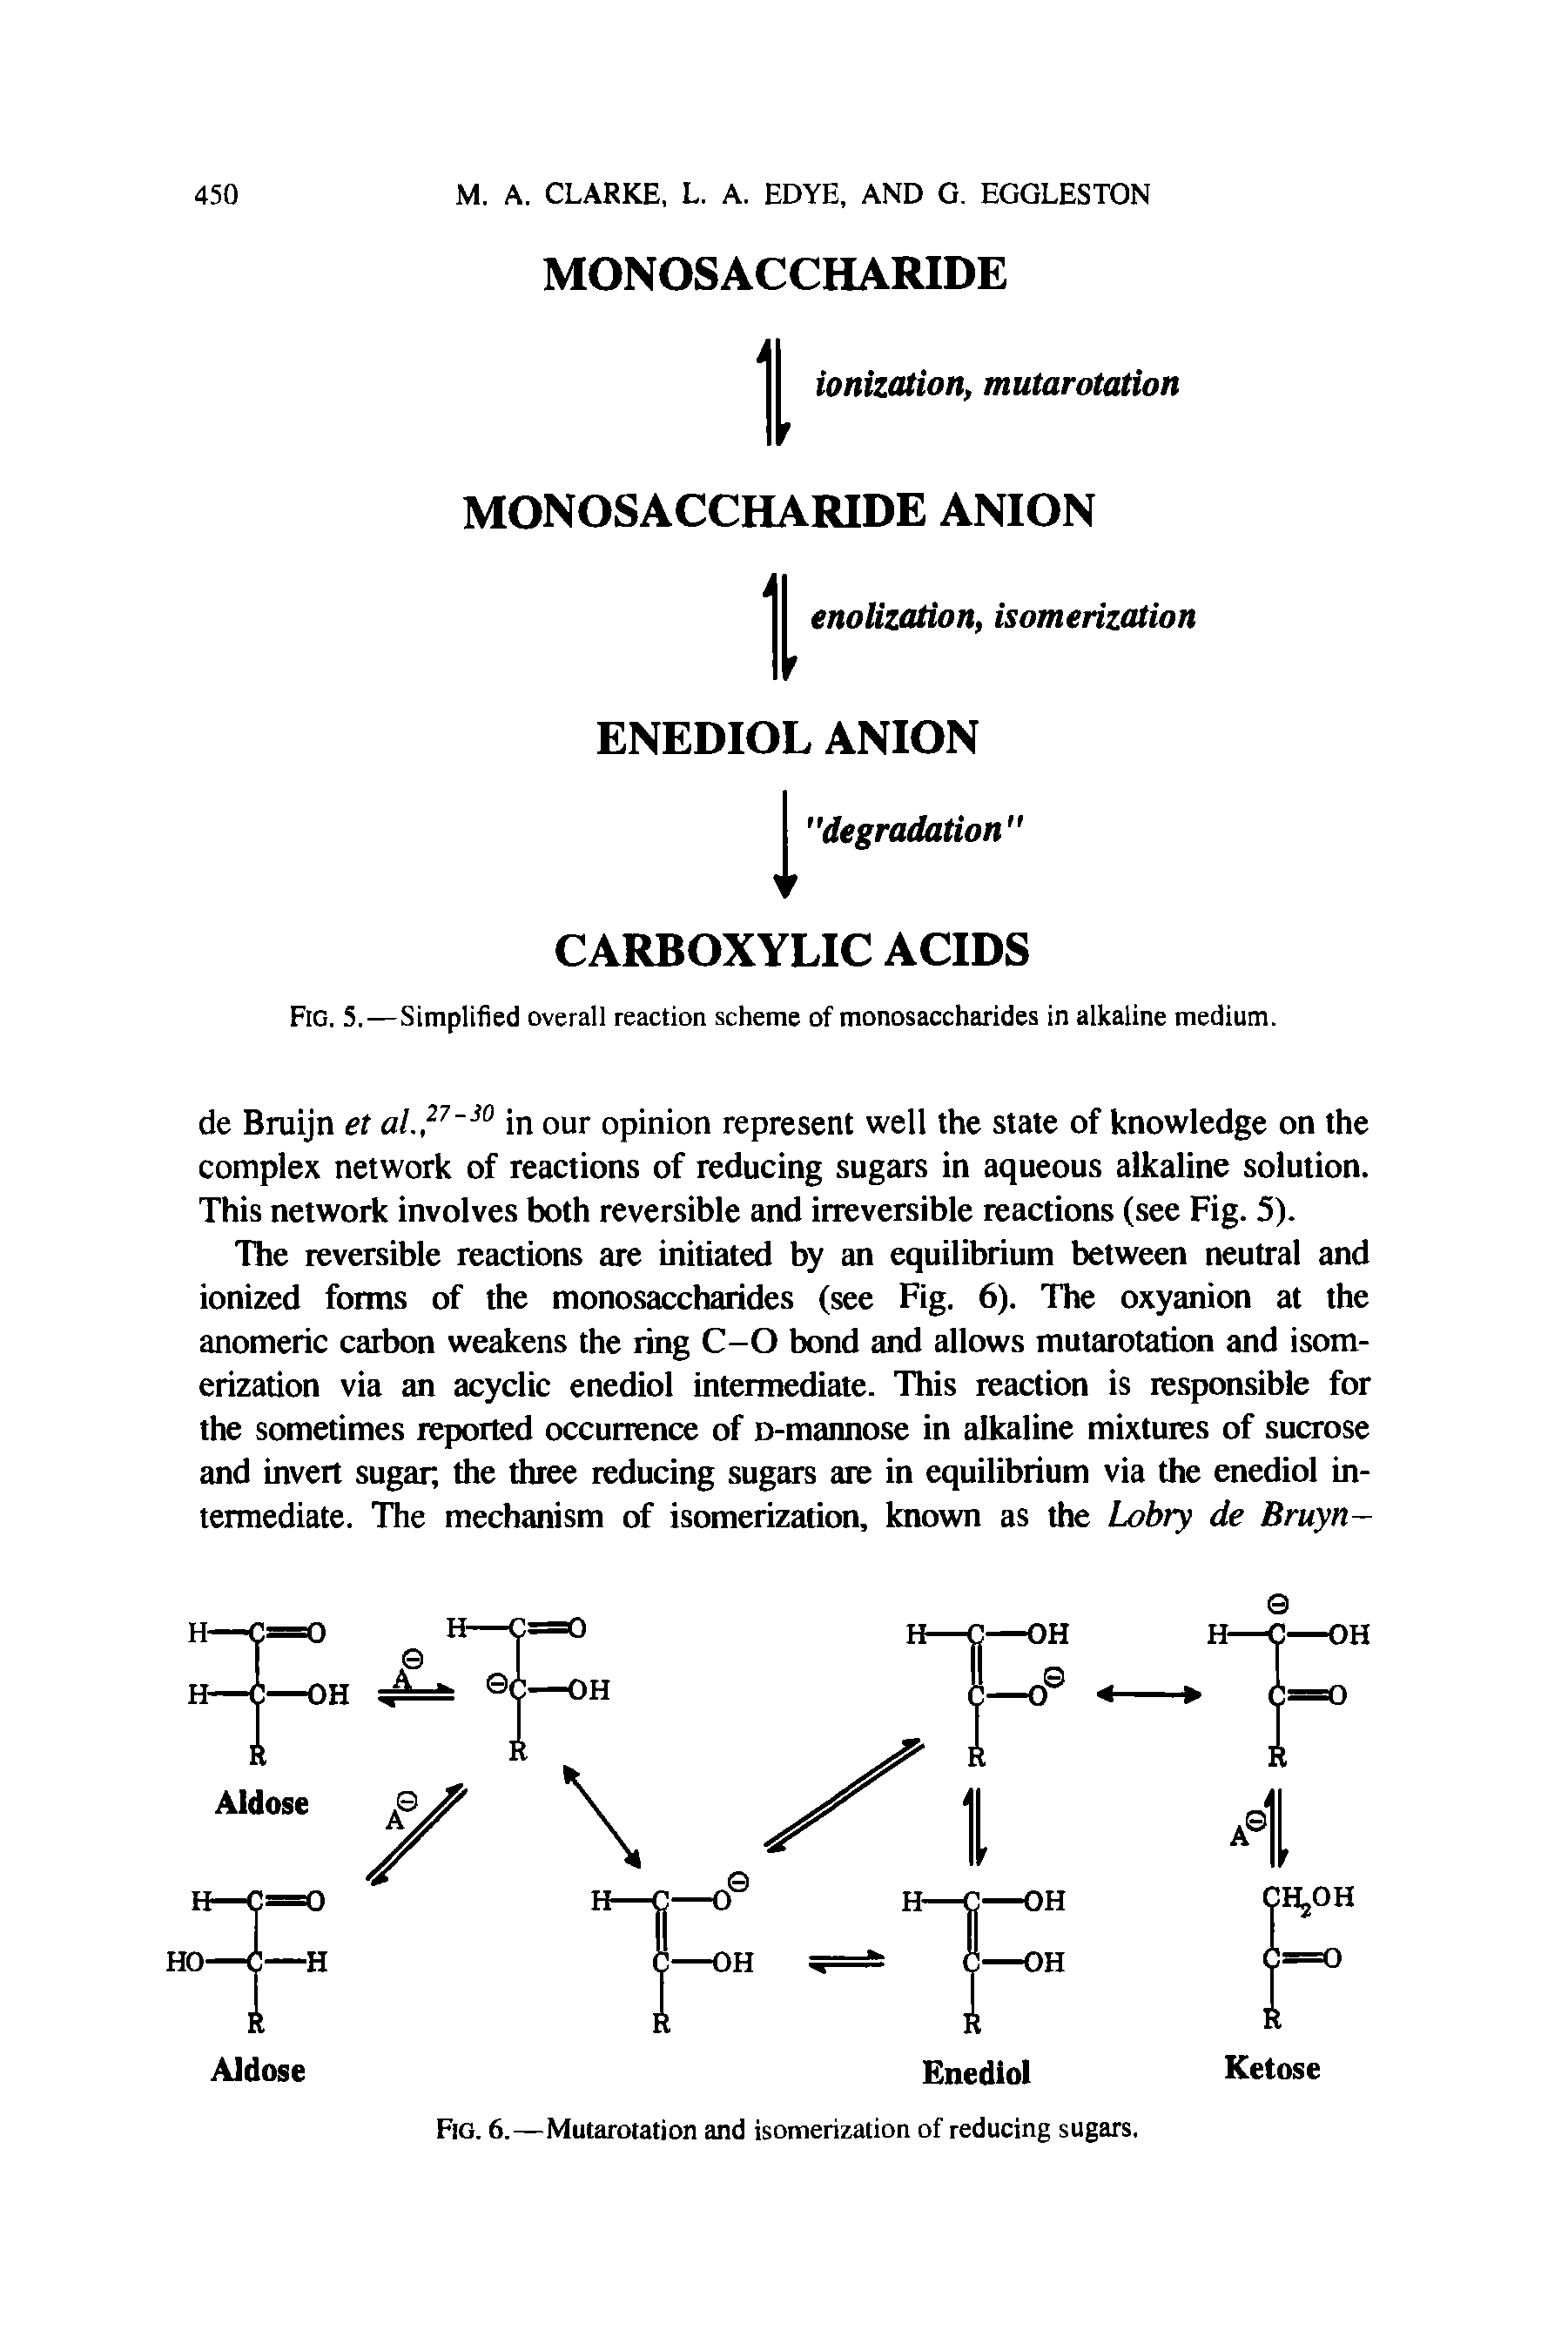 Fig. 5.—Simplified overall reaction scheme of monosaccharides in alkaline medium.